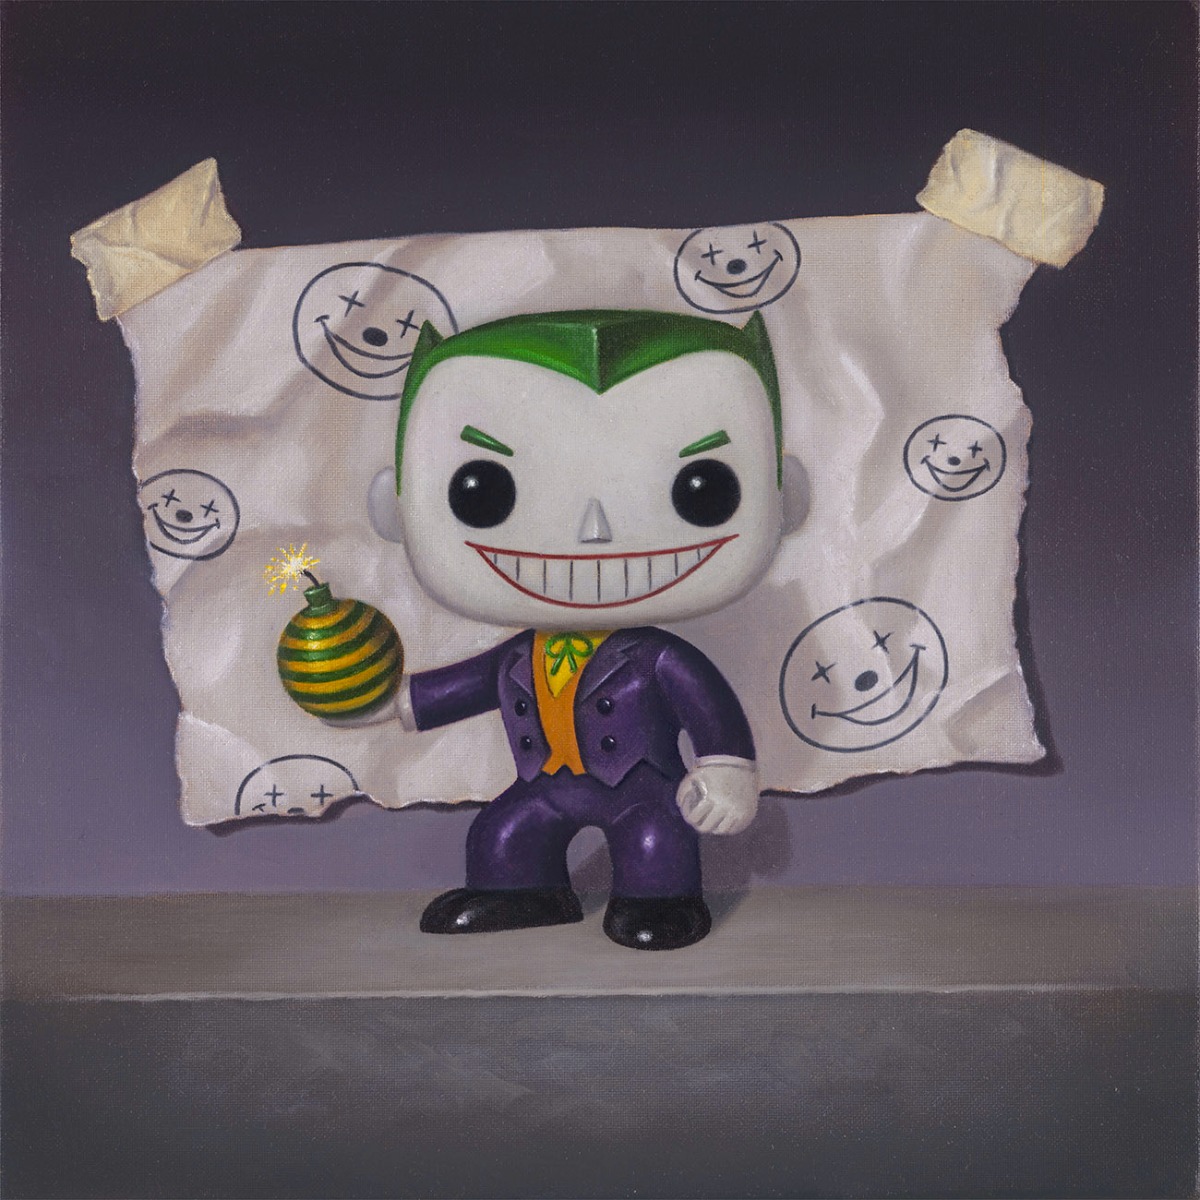 Clown Prince of Crime by Nigel Humphries, Joker